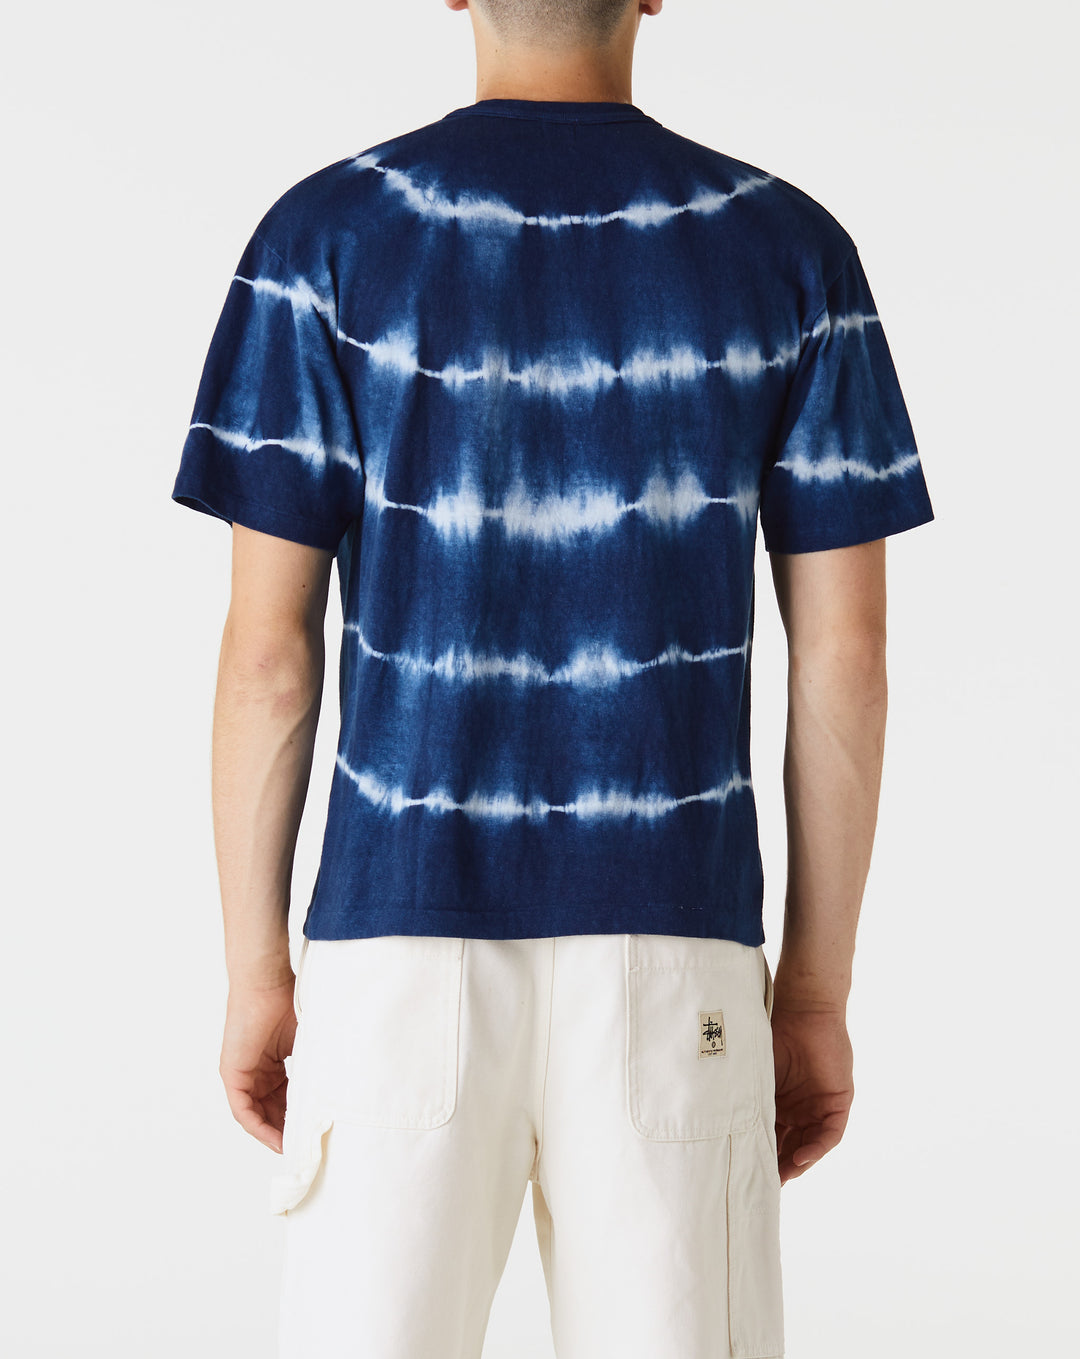 Human Made Indigo Dyed T-Shirt #2  - XHIBITION